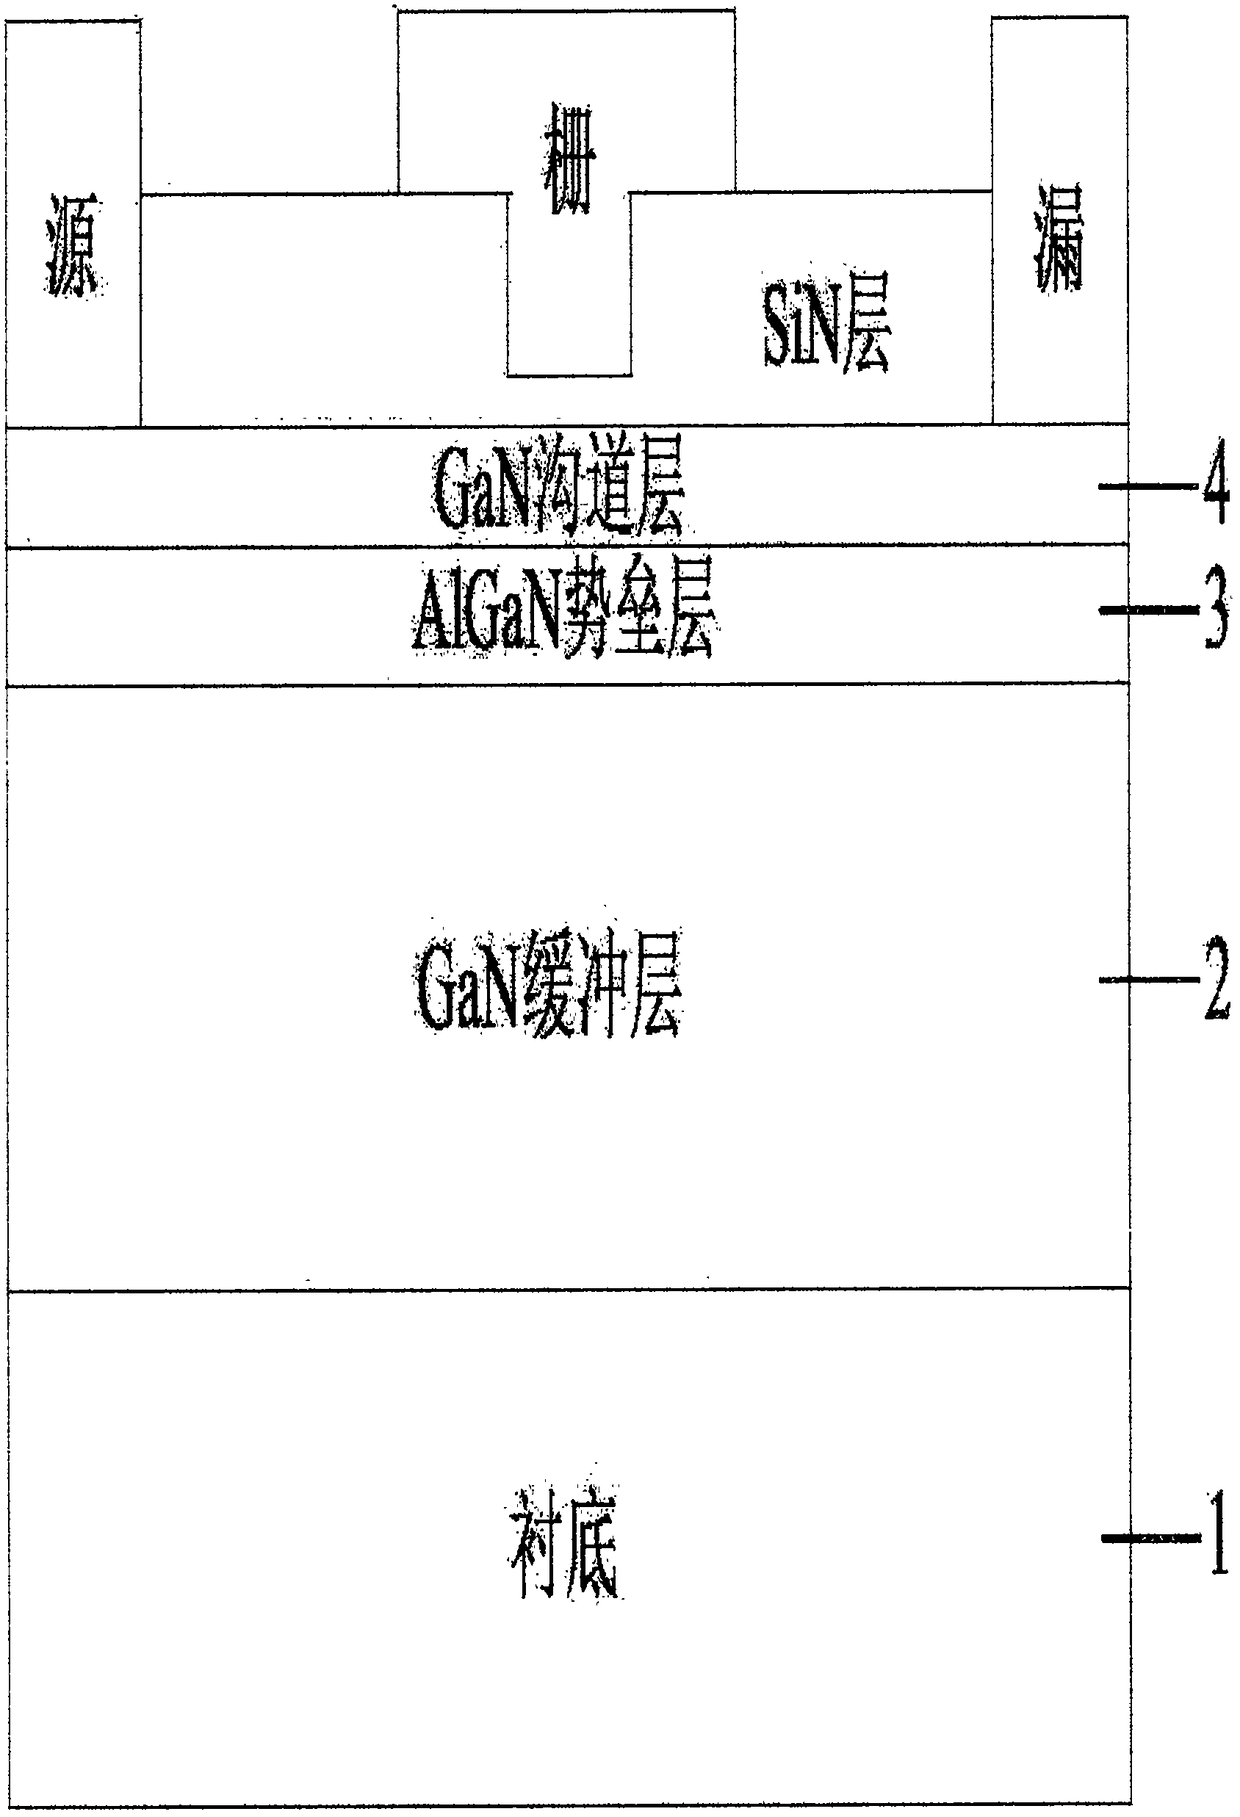 T-gate N-surface GaN/AlGaN fin-type high electron mobility transistor